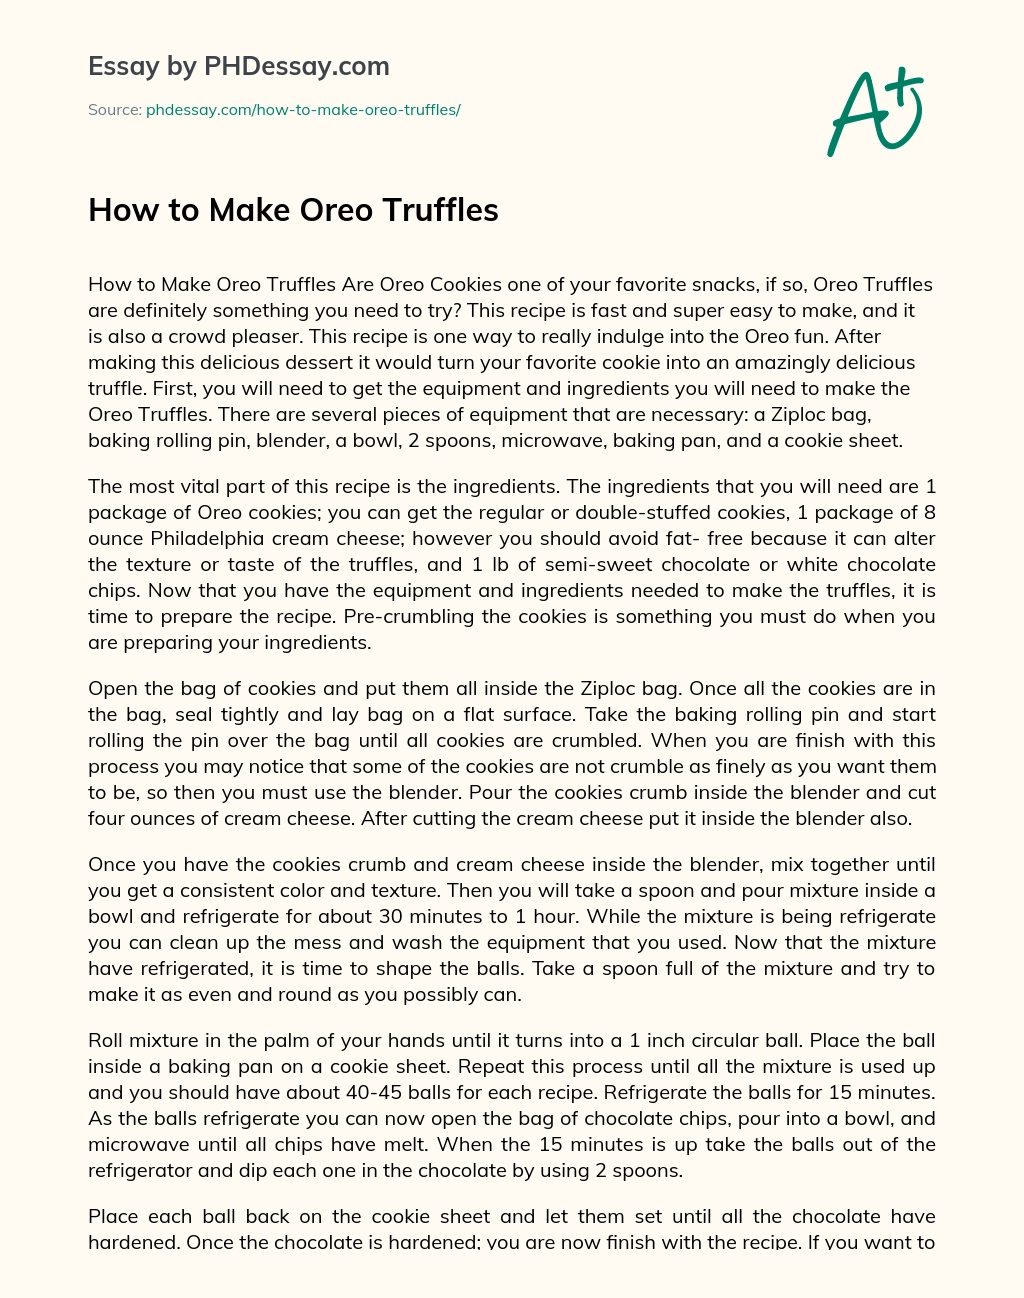 How to Make Oreo Truffles essay